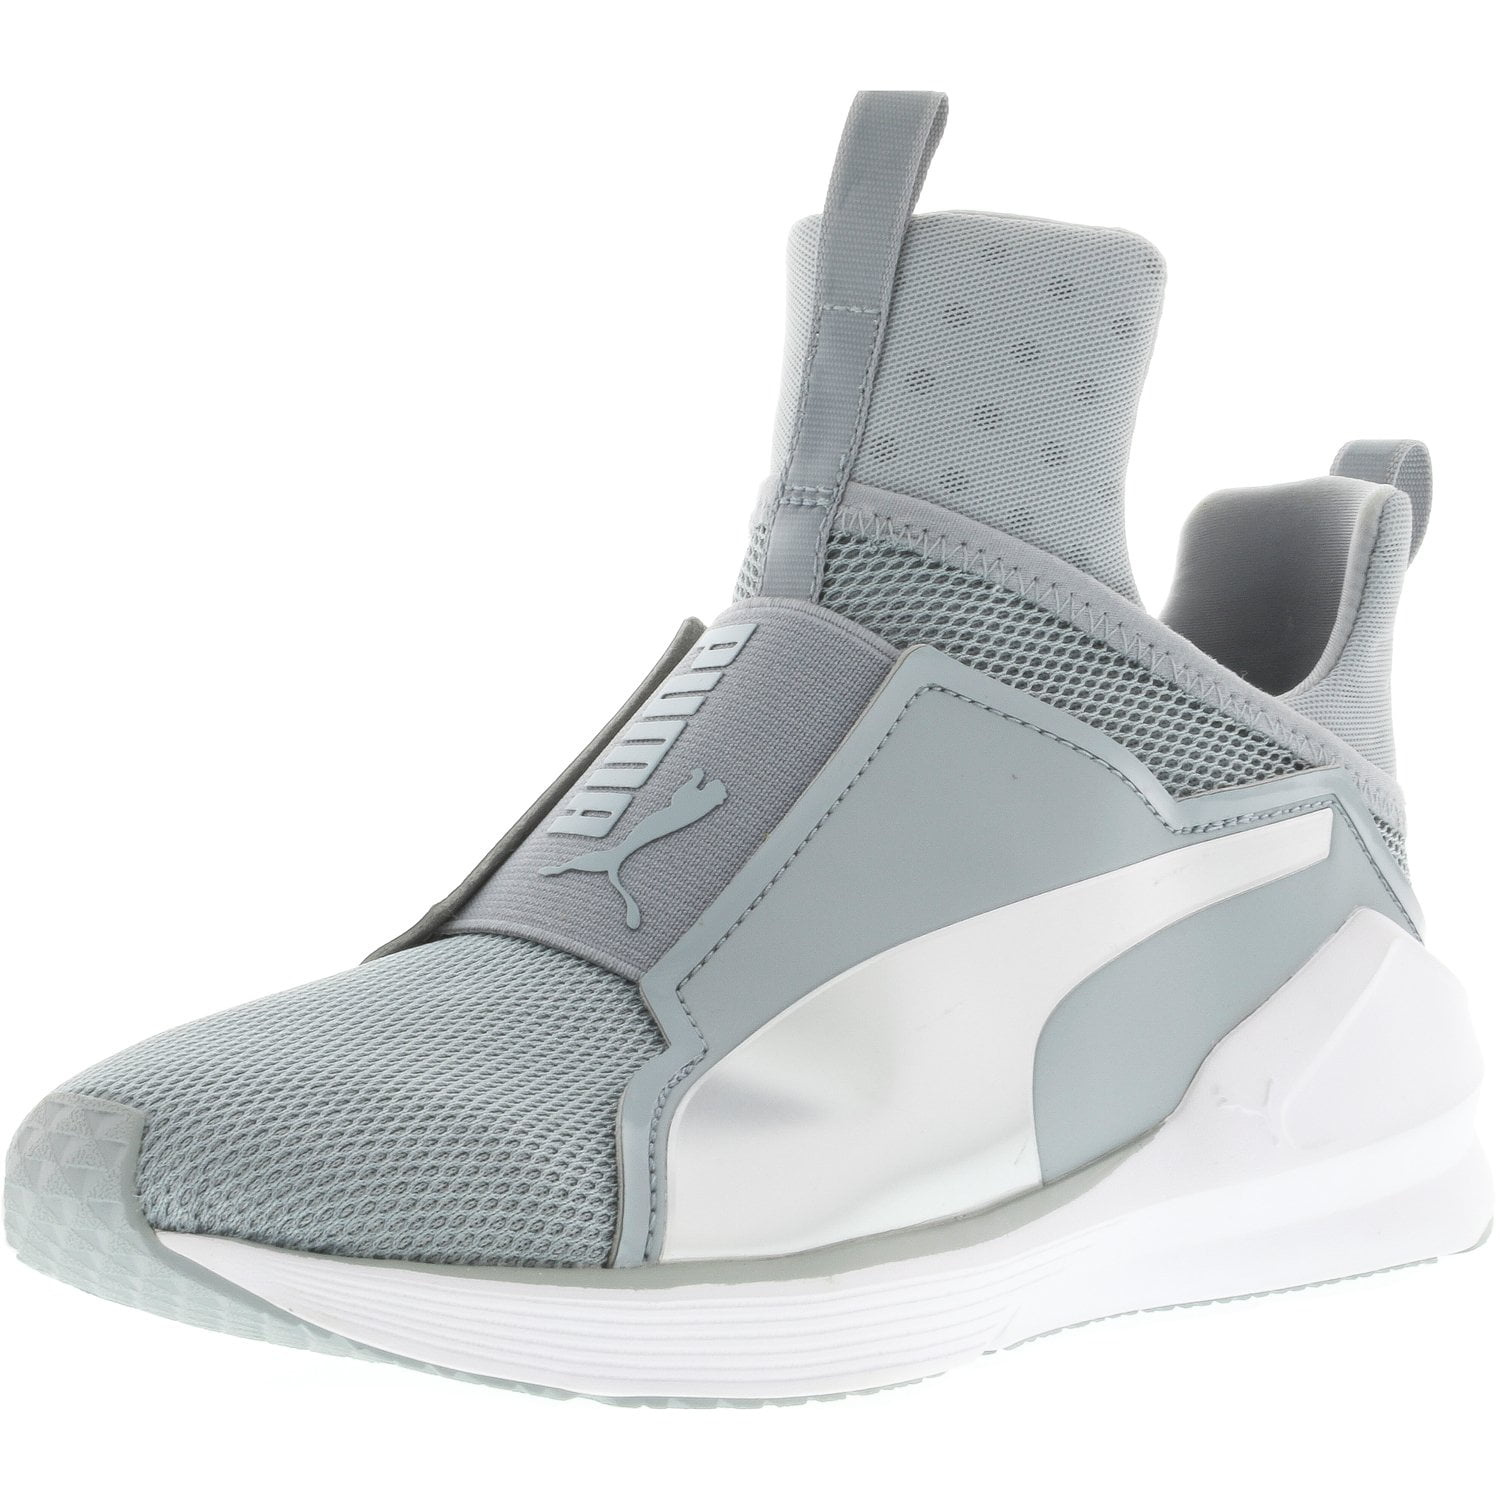 Puma Men's Fierce Core Quarry / White Silver Ankle-High Training Shoes ...